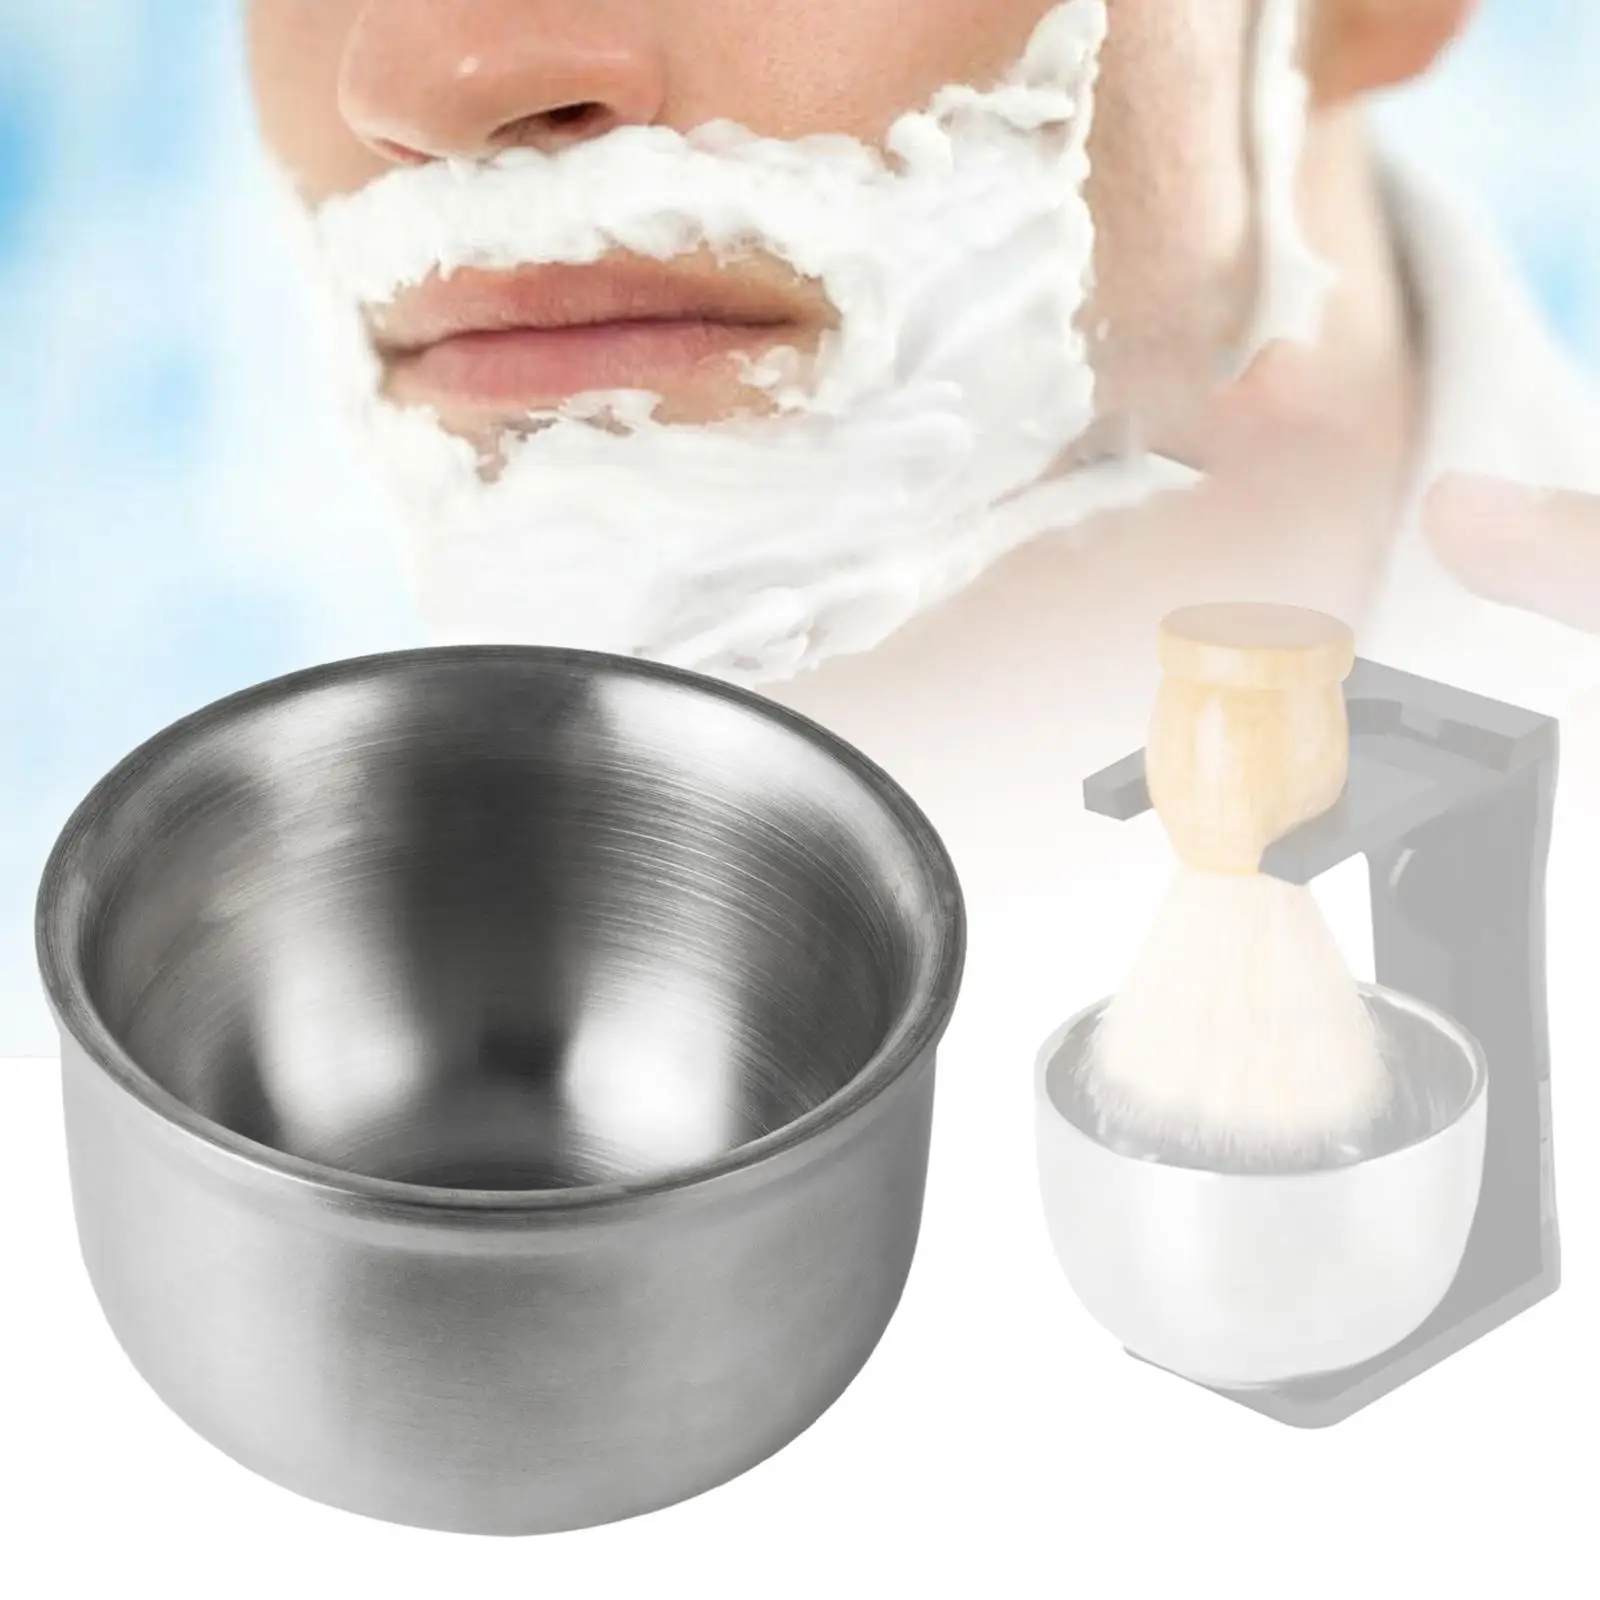 Shaving Bowl Produce Rich Foam Stainless Steel Portable Durable Fits Wet Shave Unbreakable Shaving Cup Shaving Mug for Gift Men